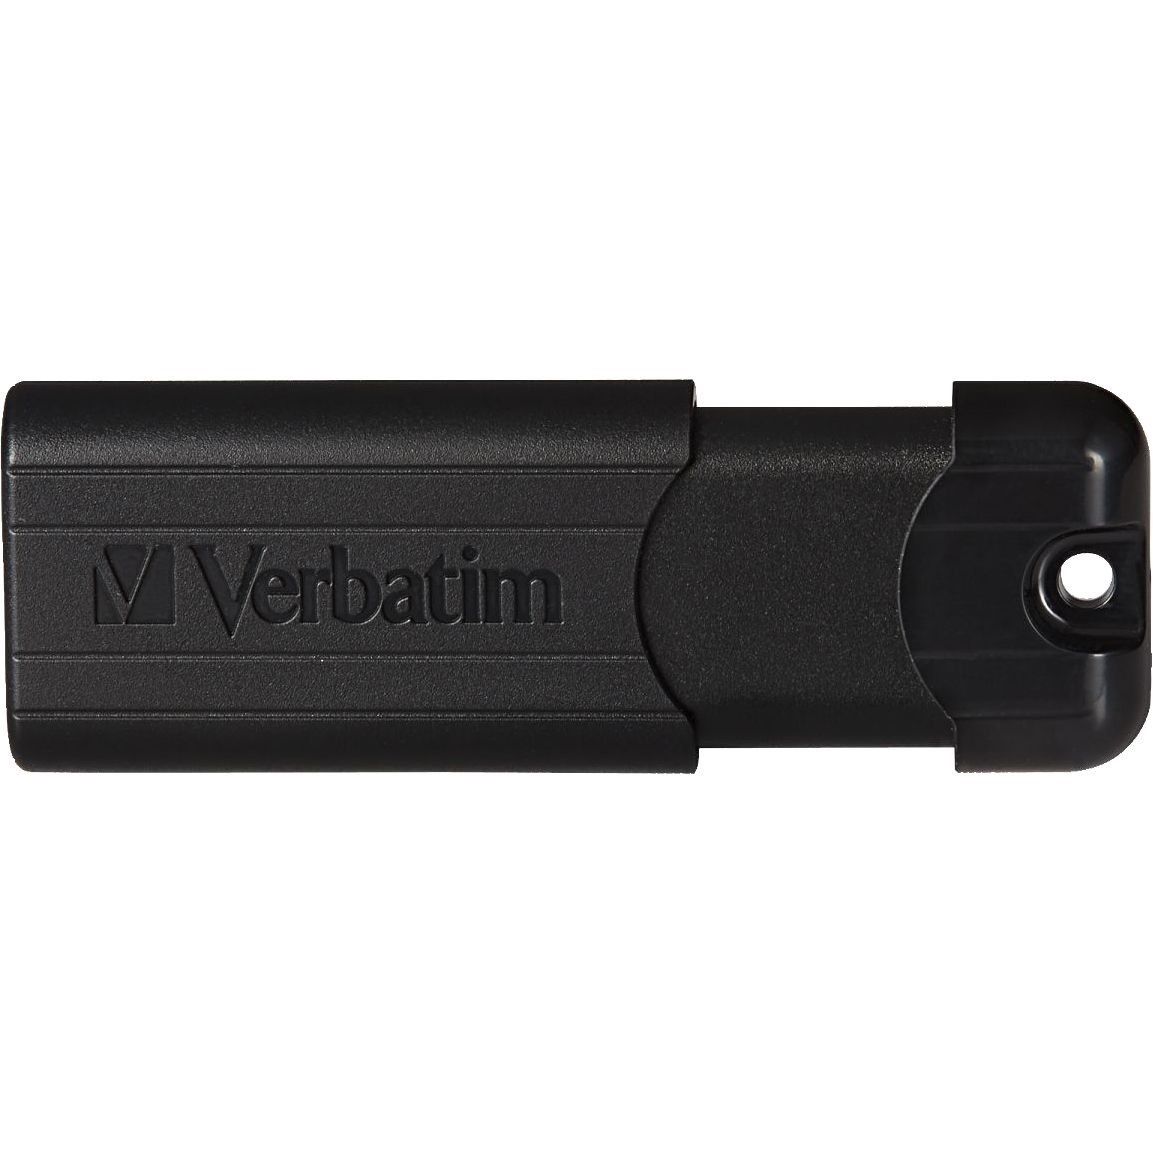 Verbatim 64GB Store 'n' Go PinStripe USB 3.0 Flash Drive